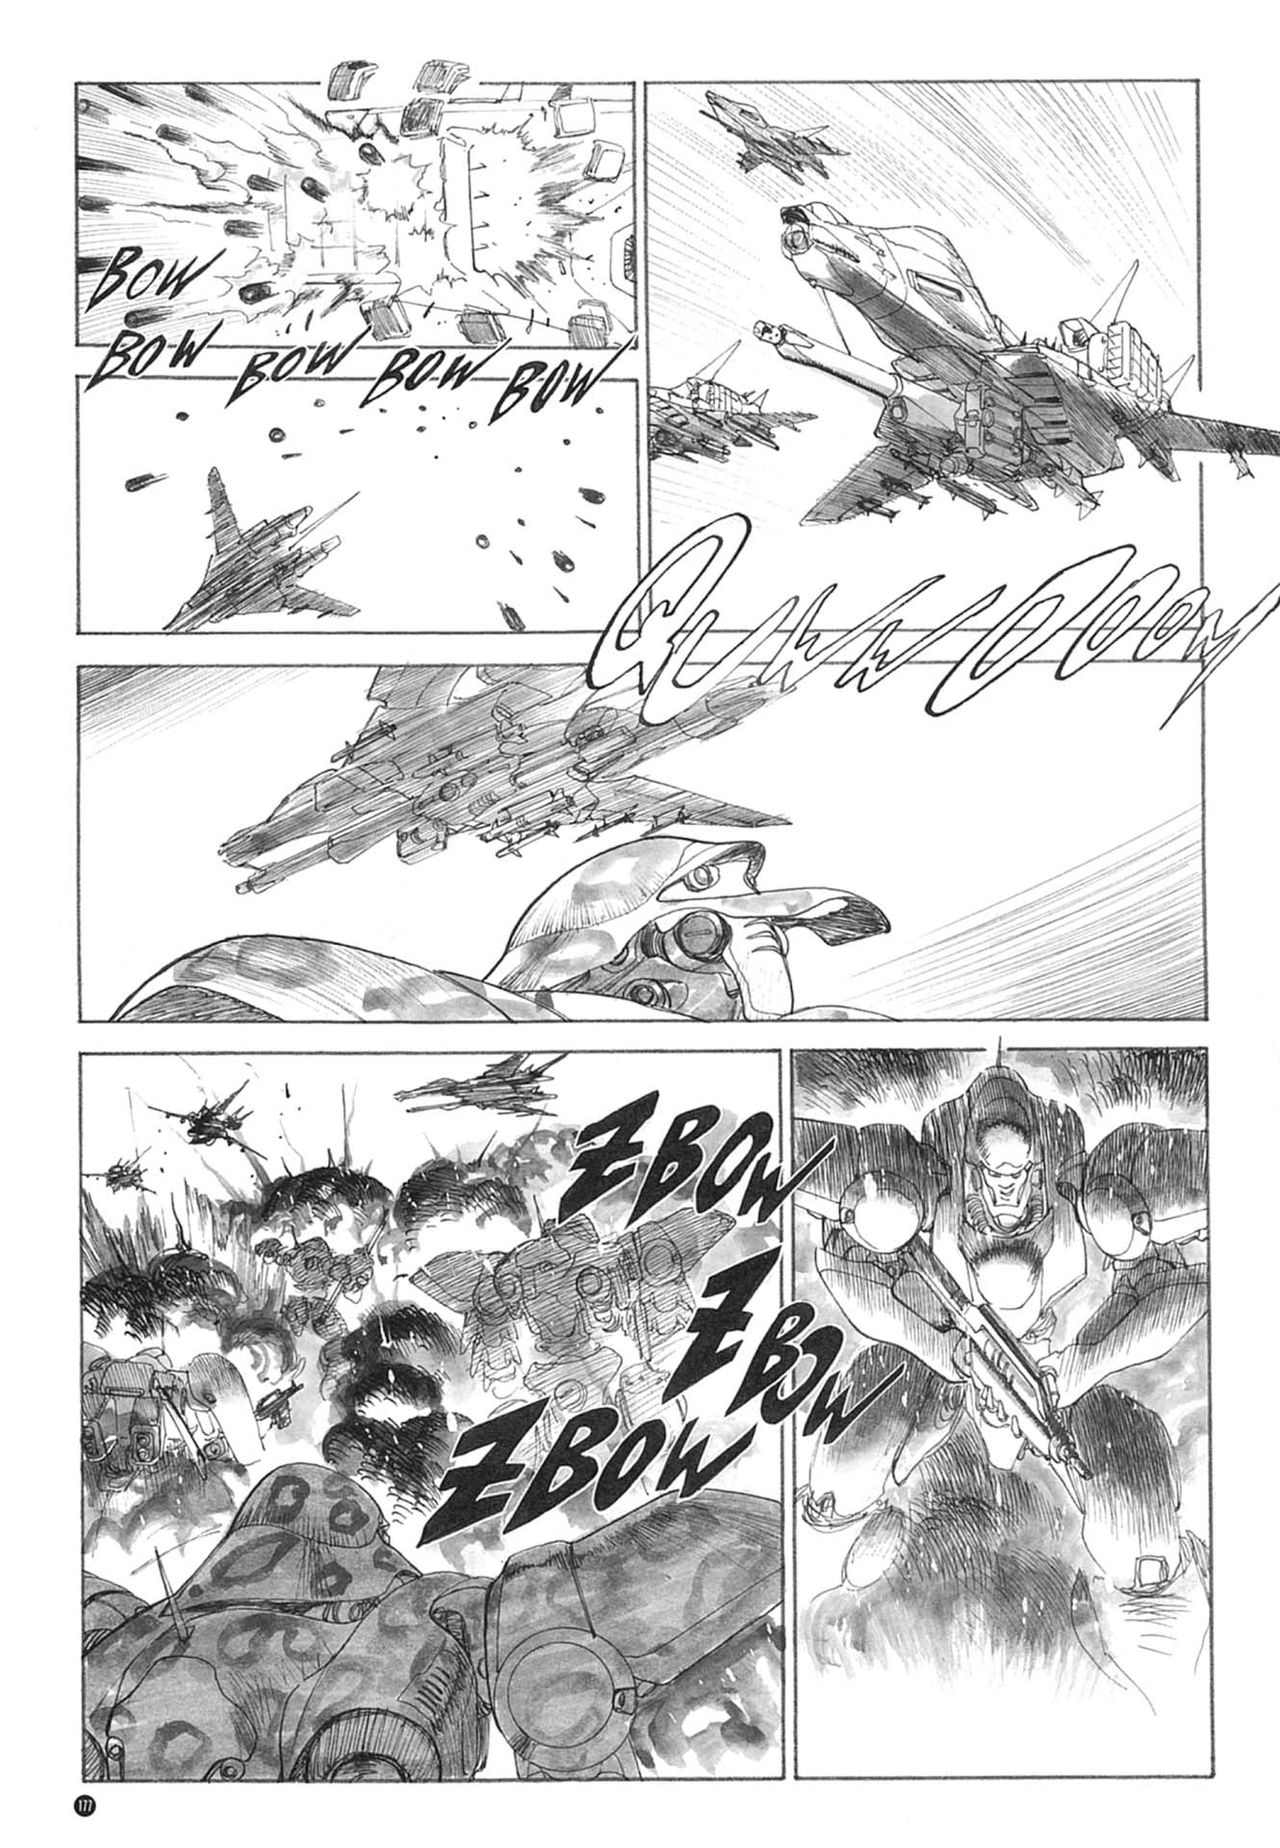 [Kazuhisa Kondo] Kazuhisa Kondo 2D & 3D Works - Go Ahead - From Mobile Suit Gundam to Original Mechanism 176